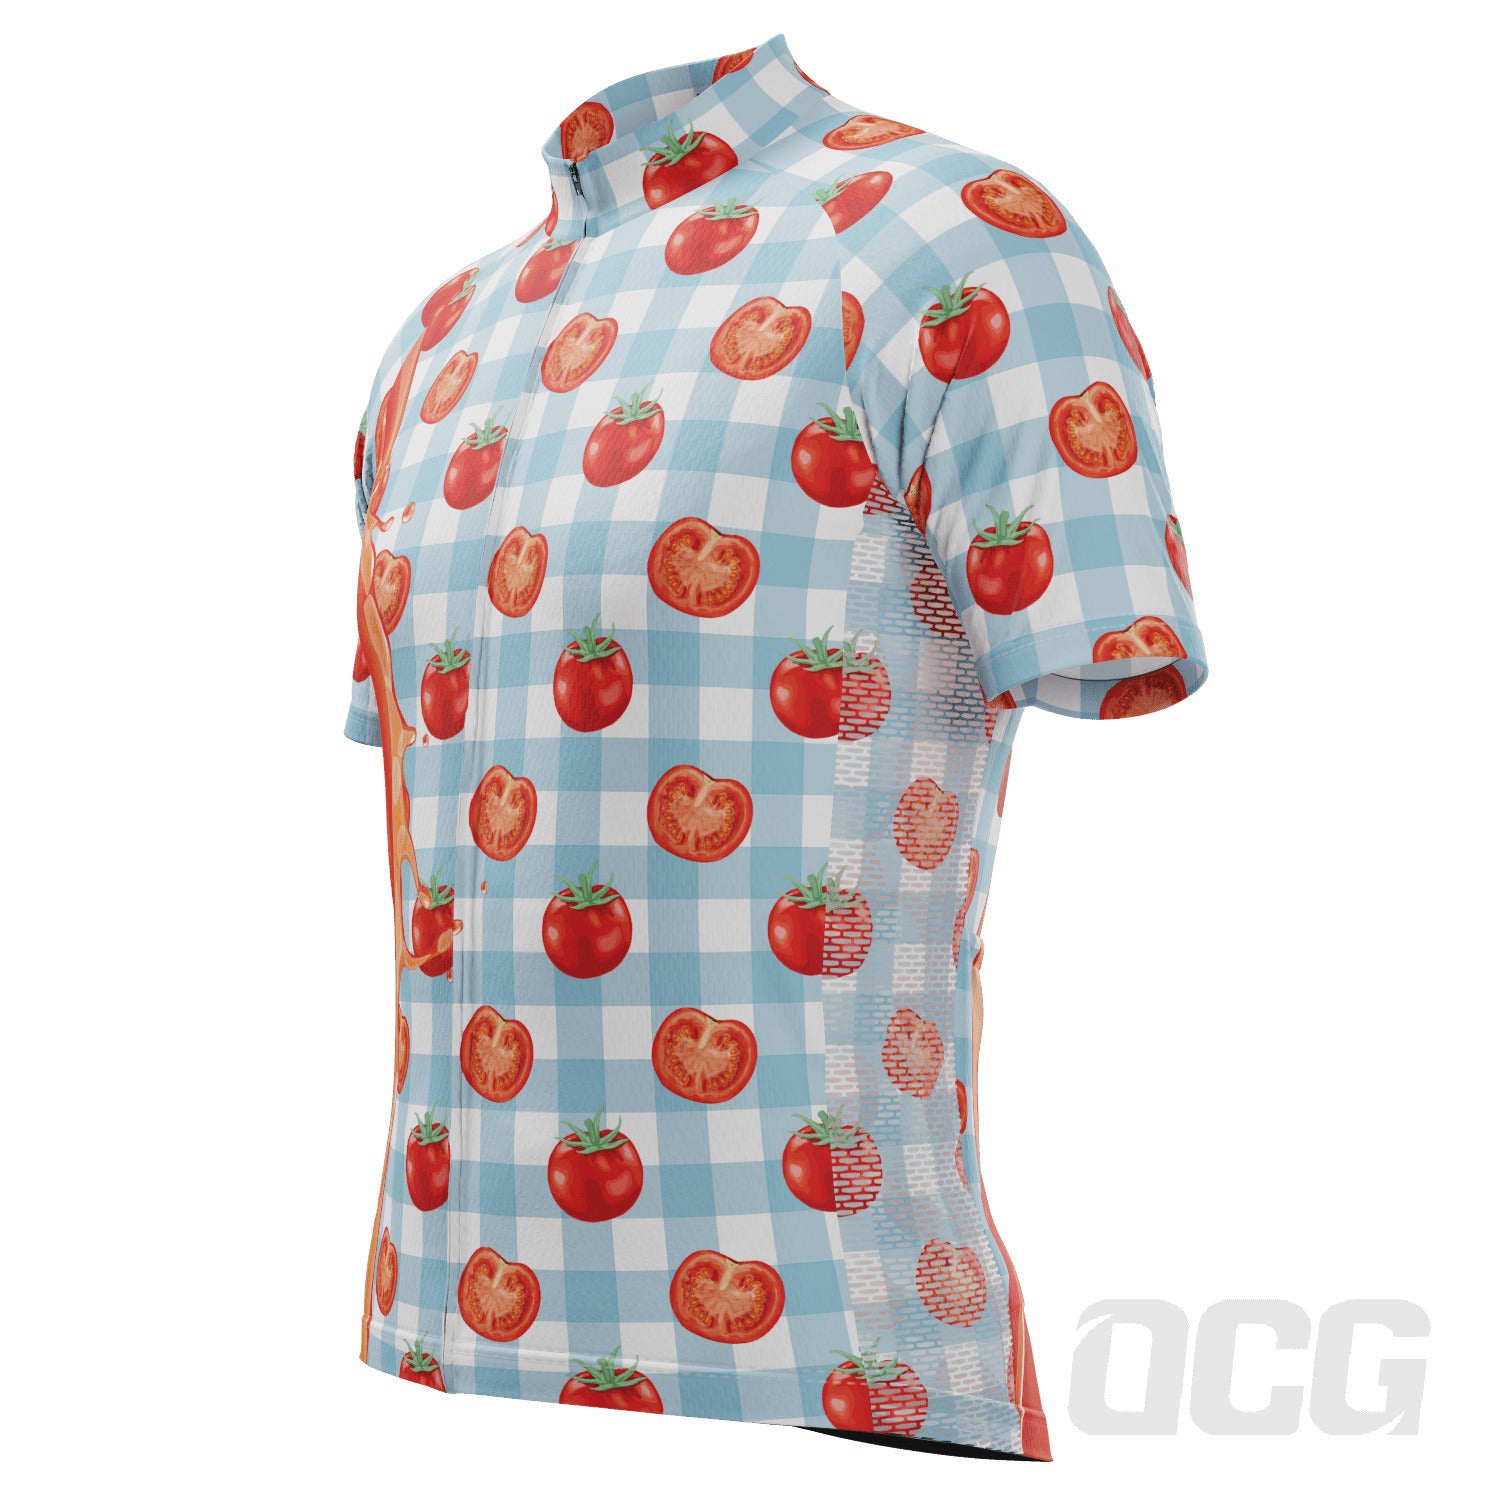 Tomato Sauce Short Sleeve Cycling Jersey